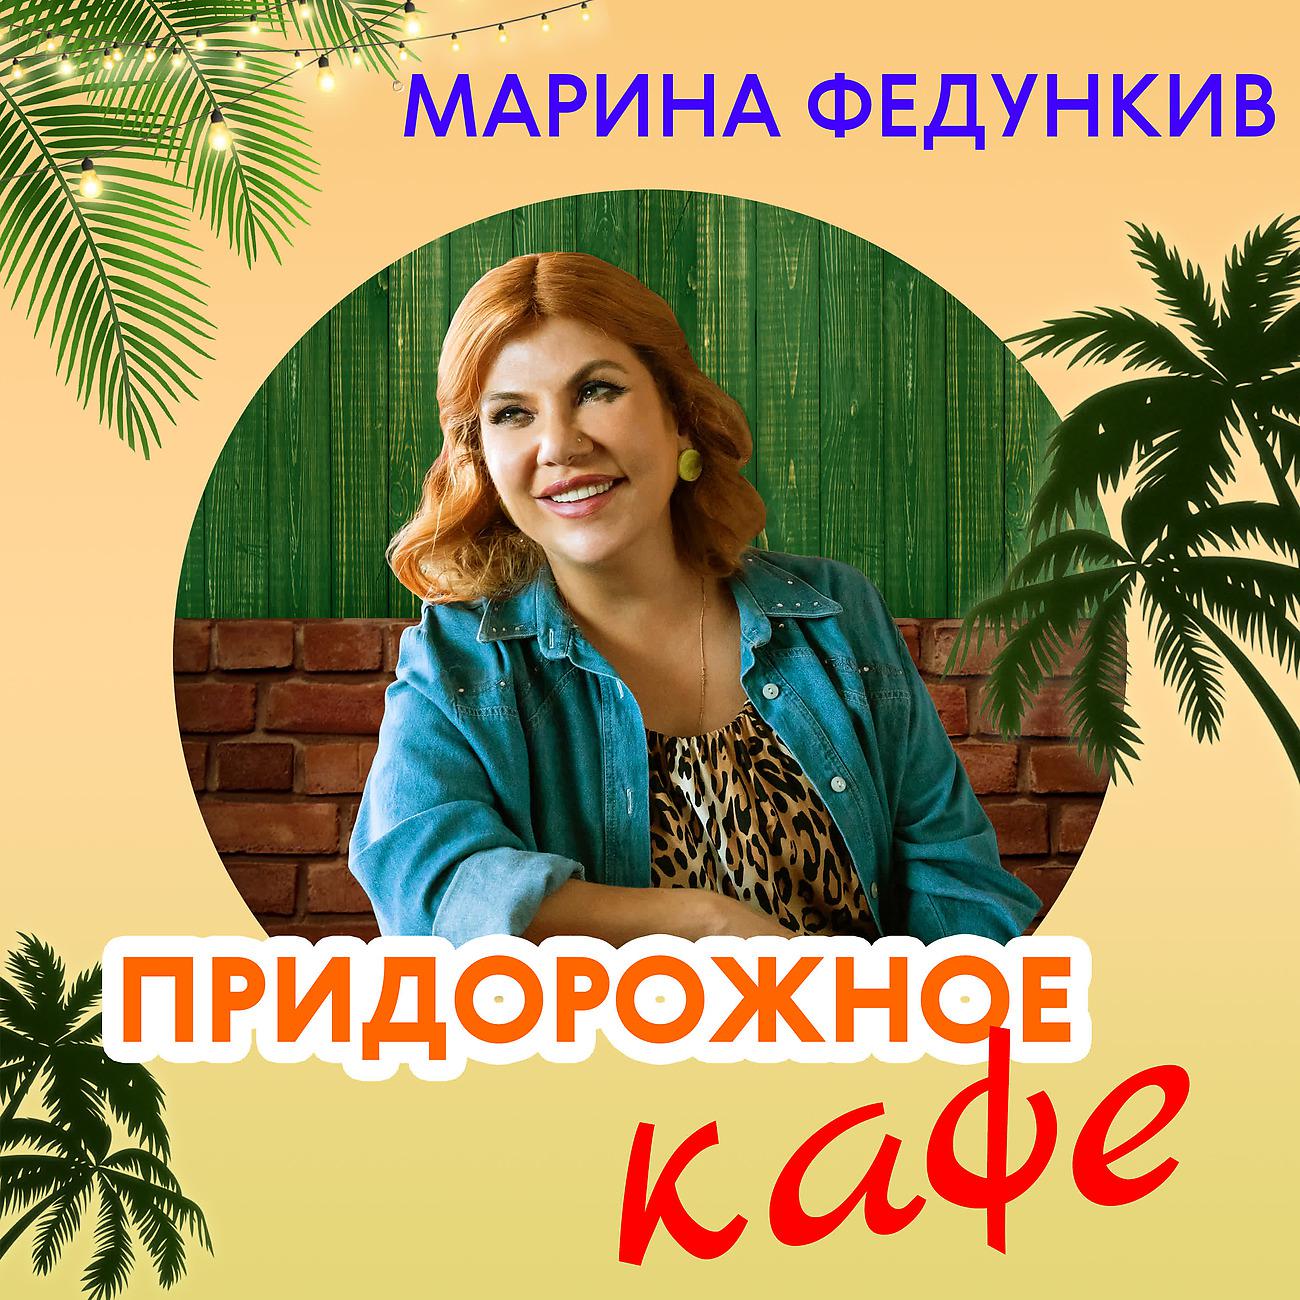 Марина Федункив все песни в mp3